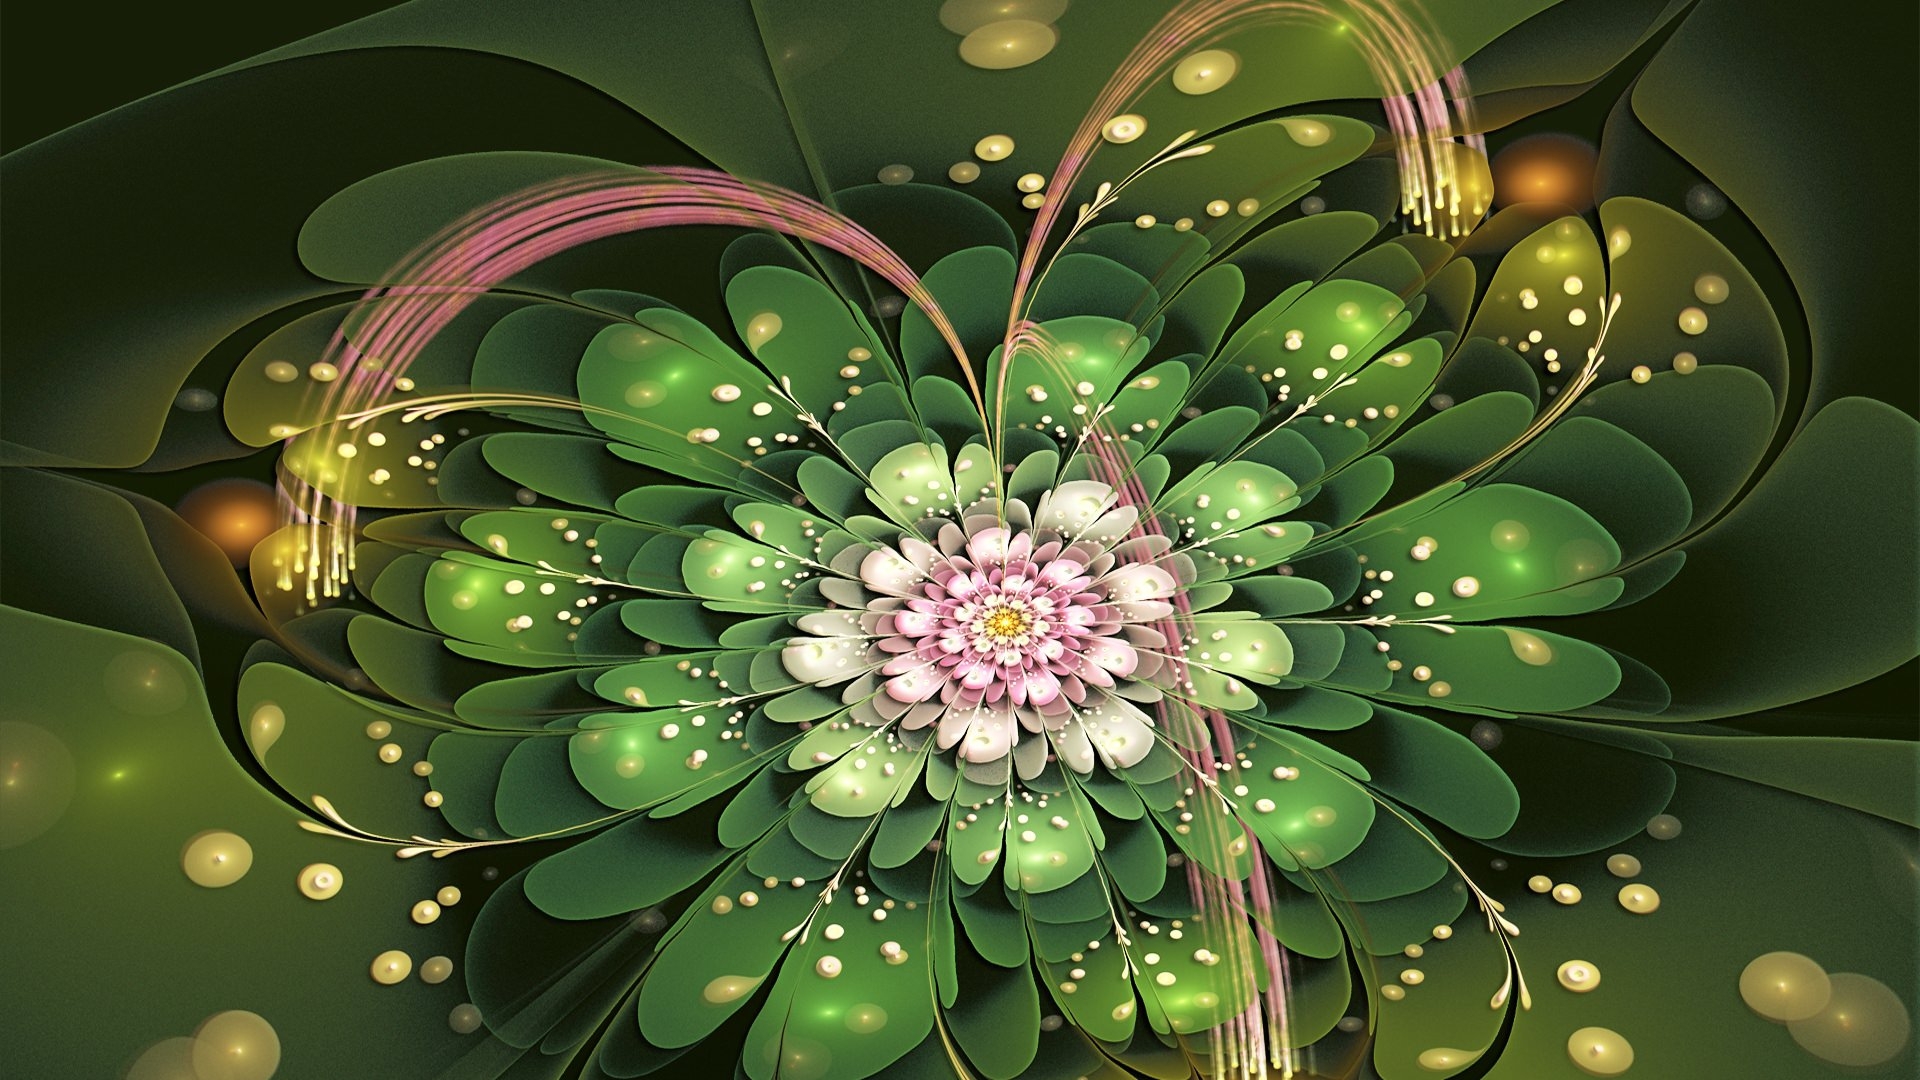 fractal flowers images